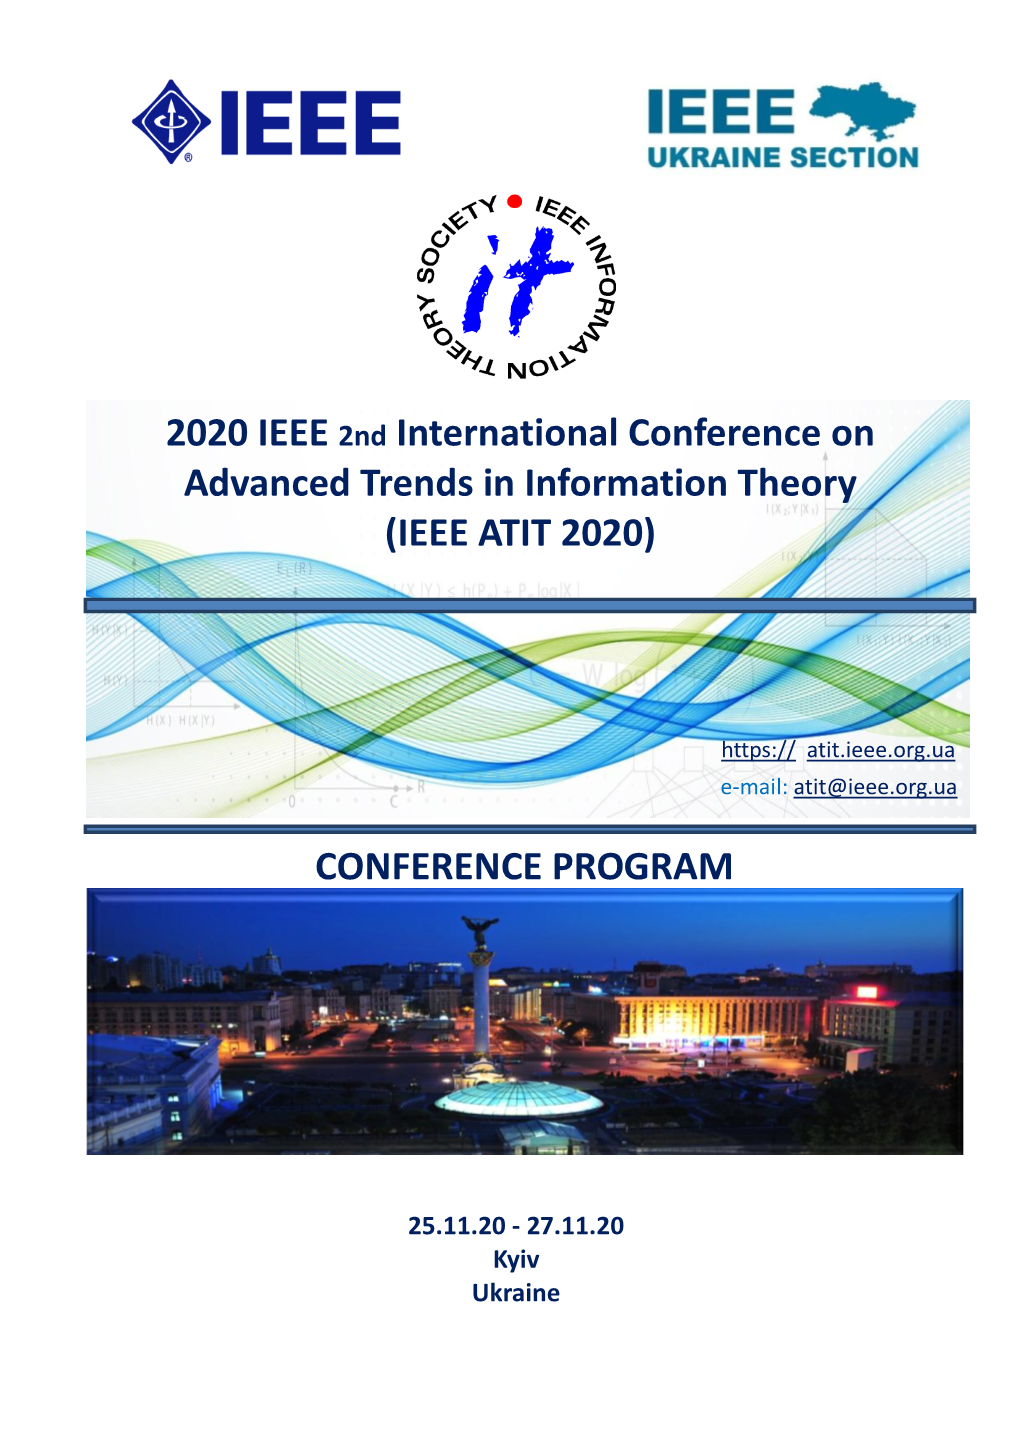 (Ieee Atit 2020) Conference Program